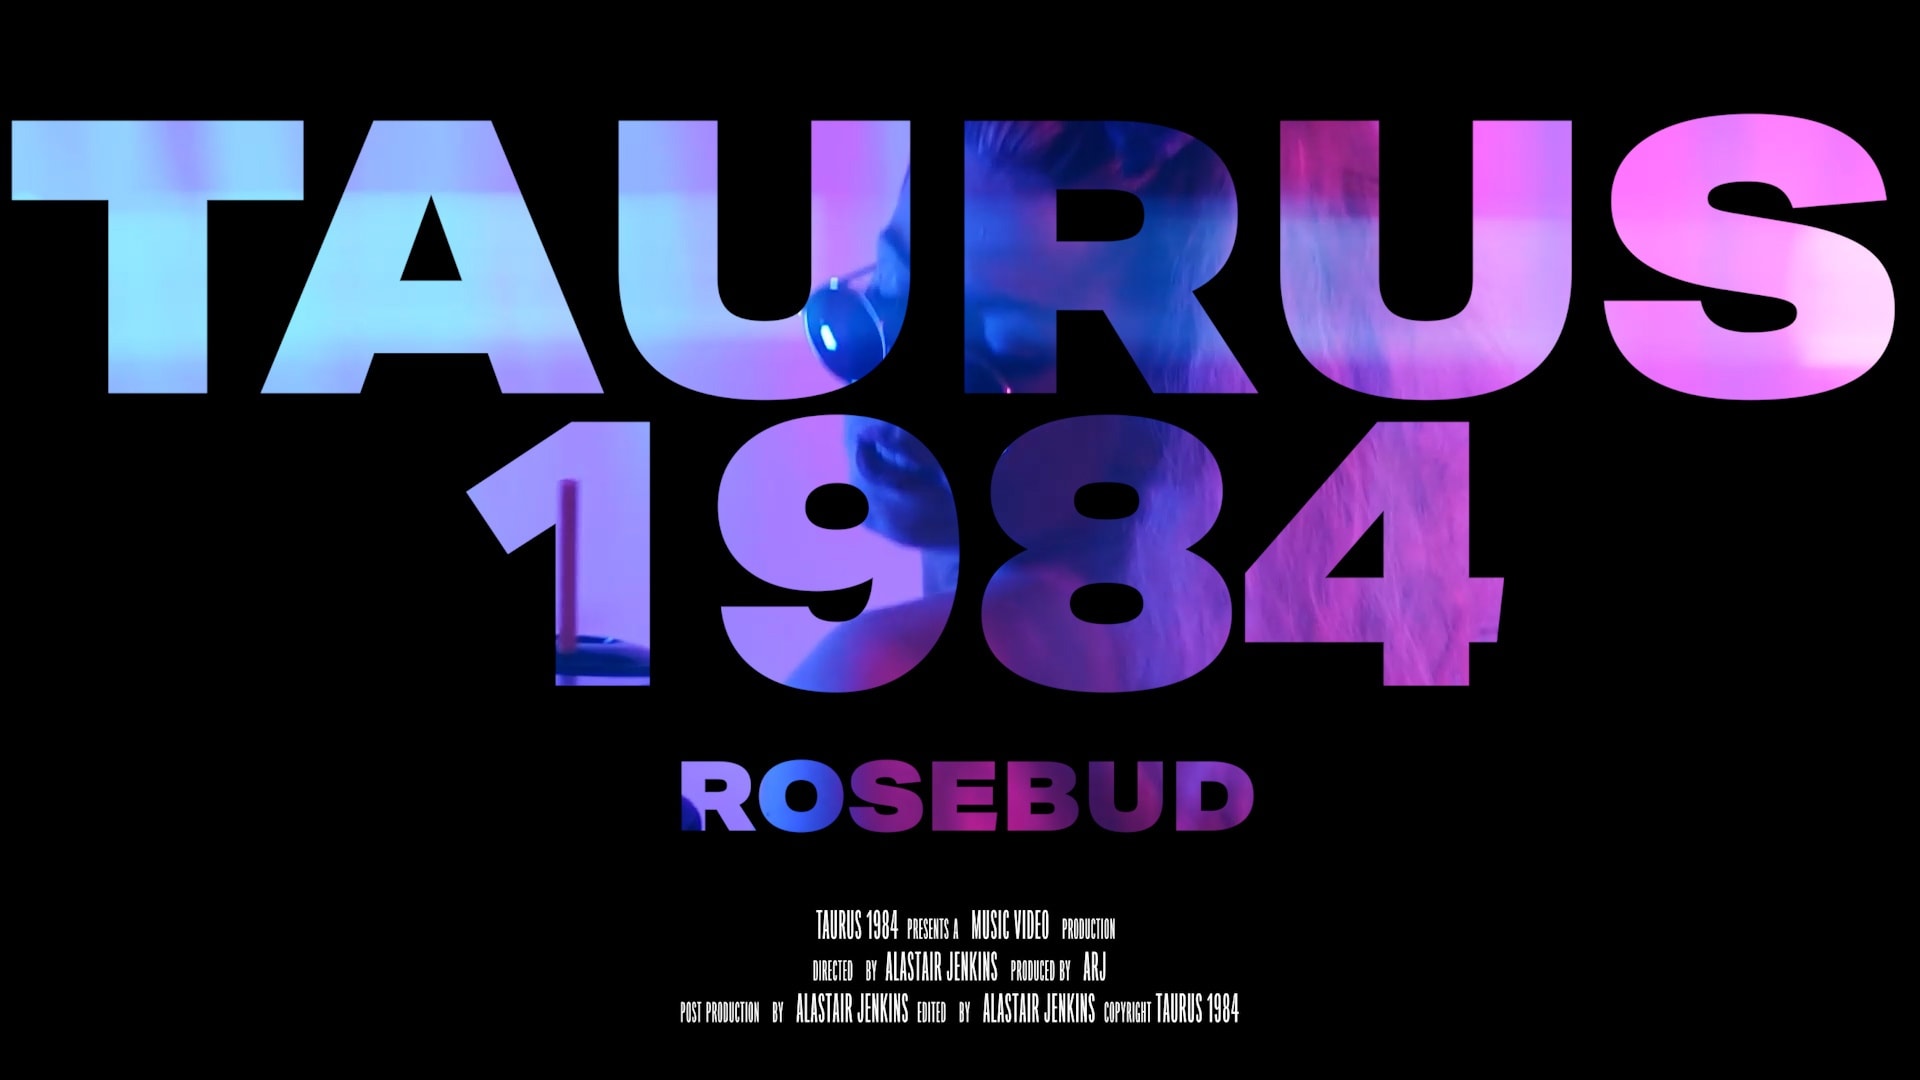 Retrowave Taurus 1984 With their funky rock tune "Rosebud"